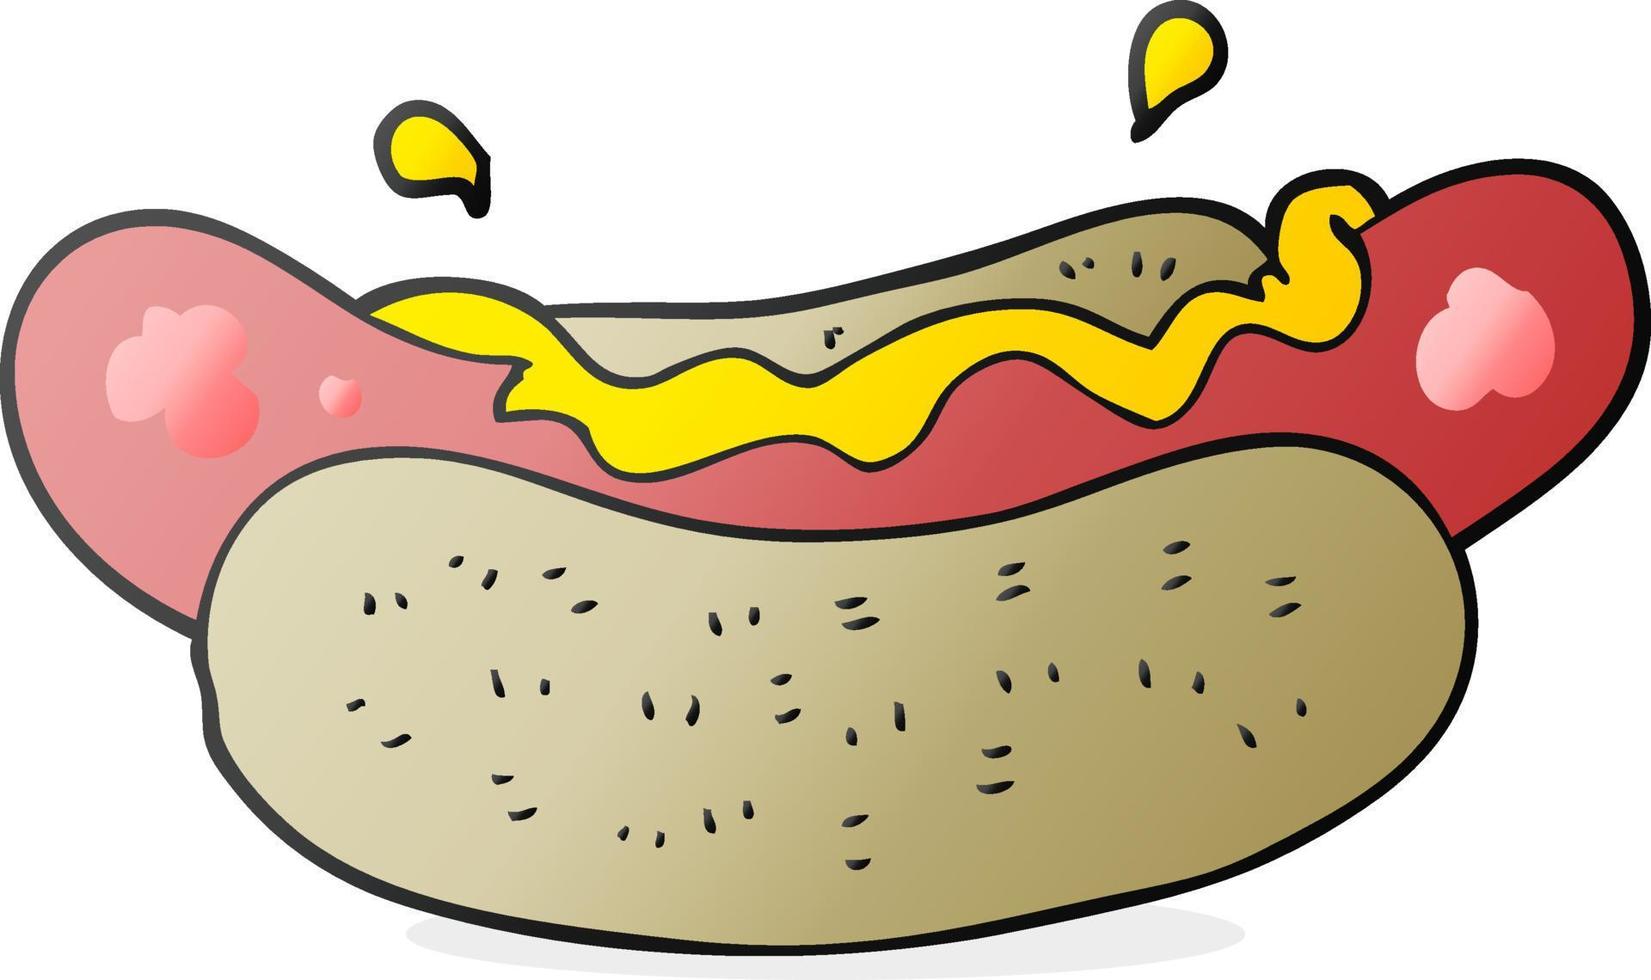 doodle character cartoon hotdog vector